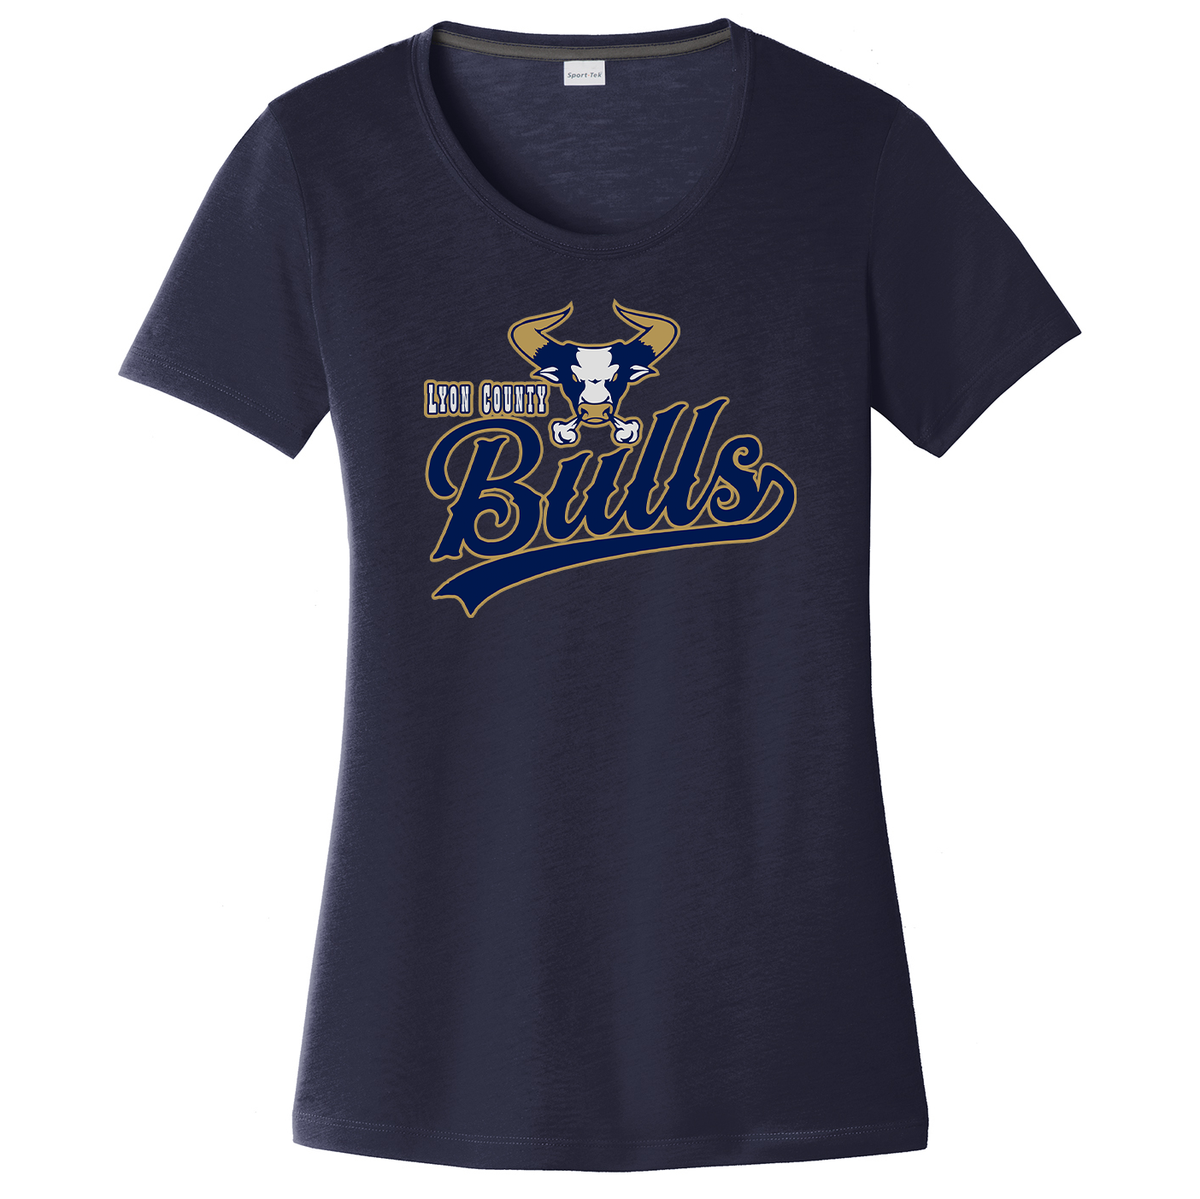 Lyon County Baseball Women's CottonTouch Performance T-Shirt